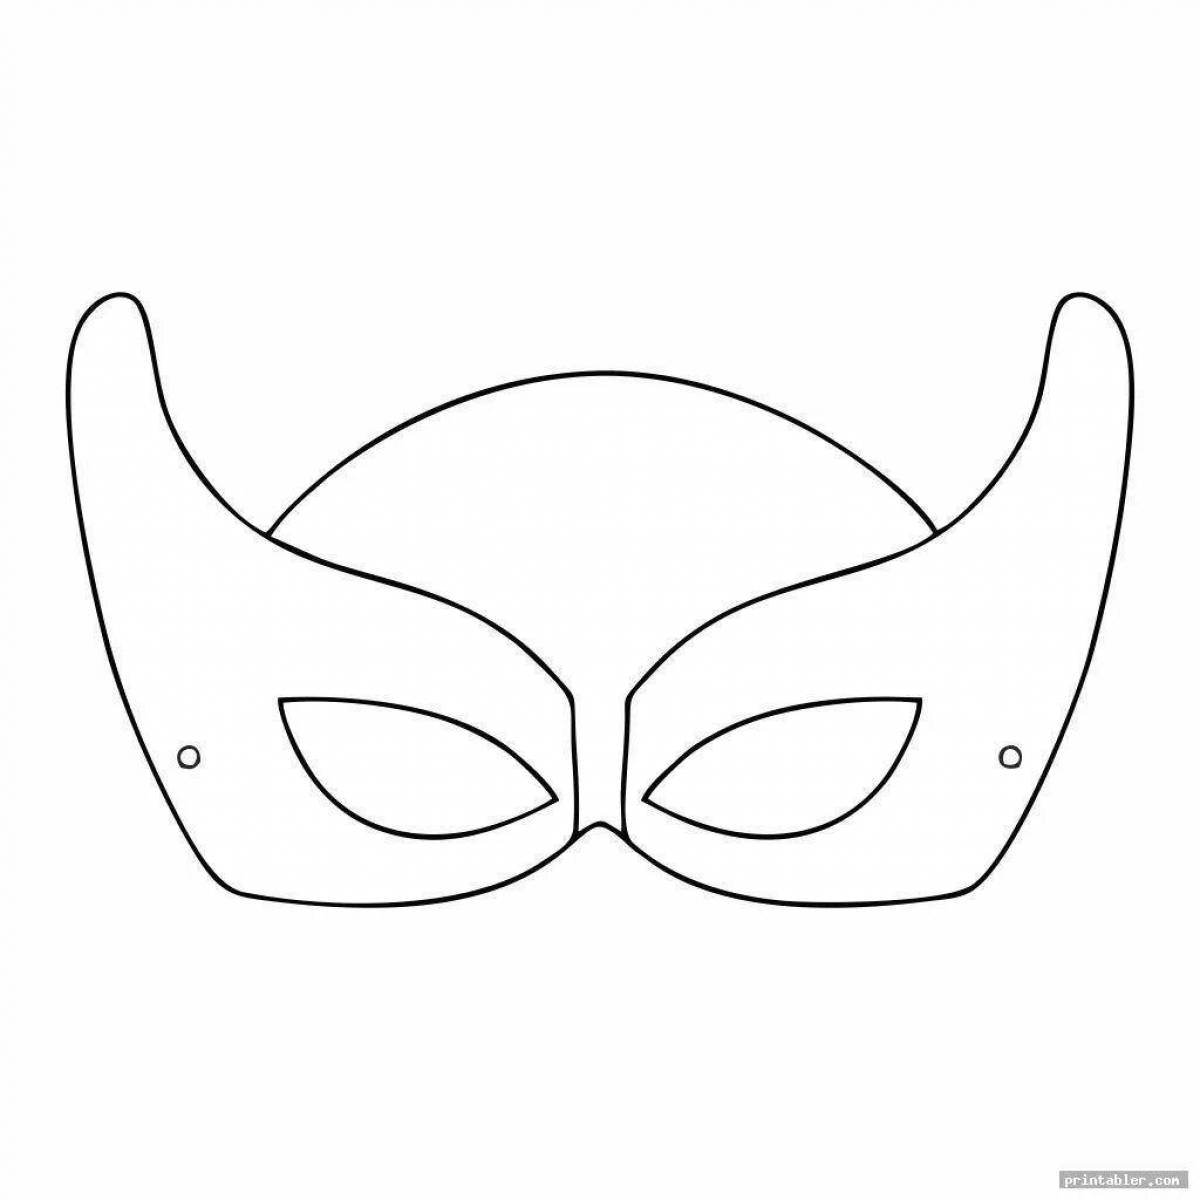 Fine superhero mask coloring page